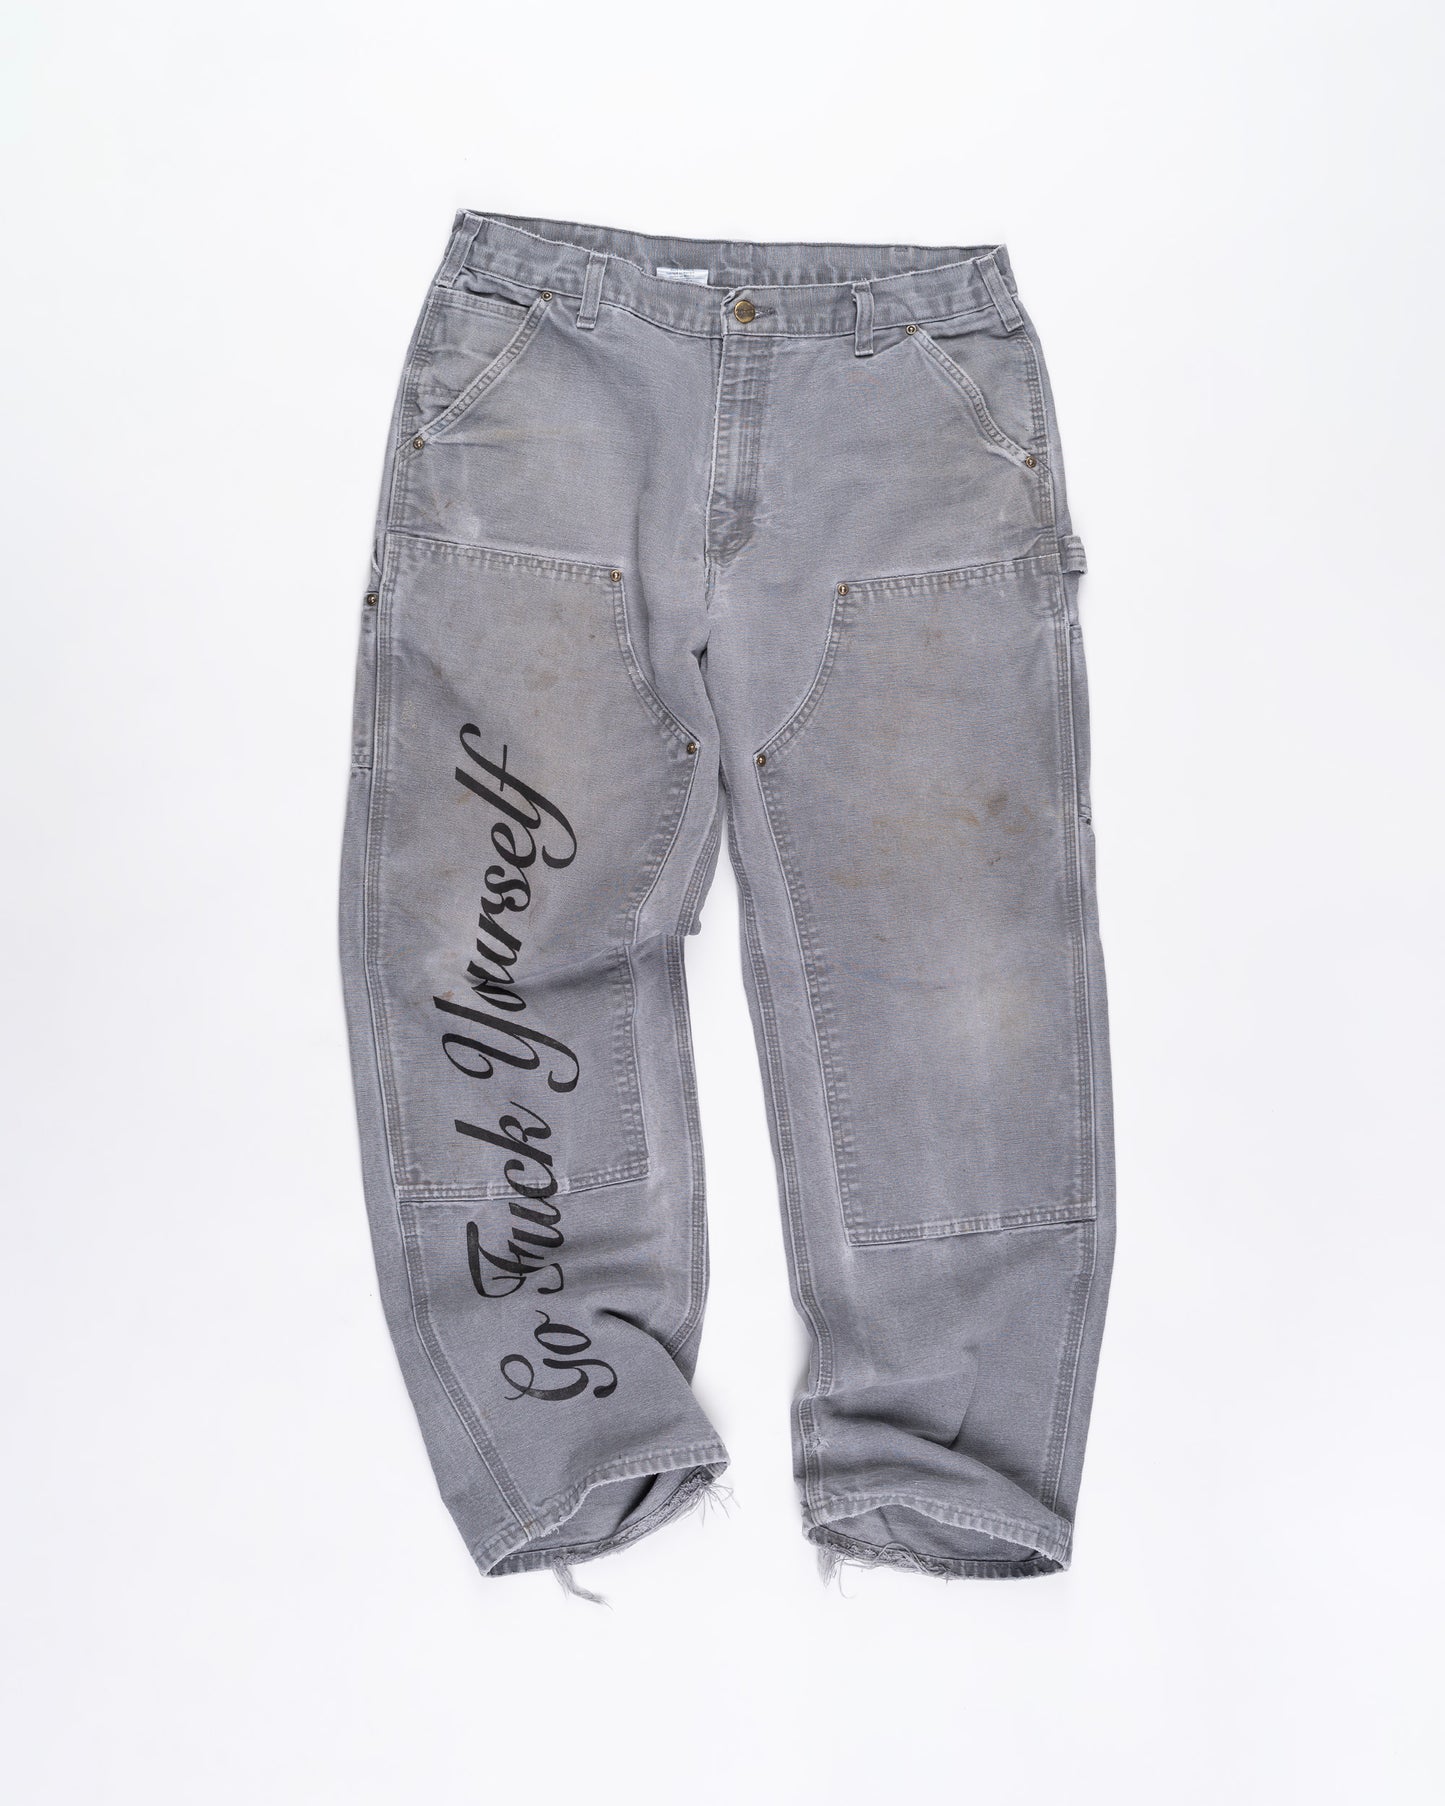 Light Gray Carhart Cargo Pants Size: 36